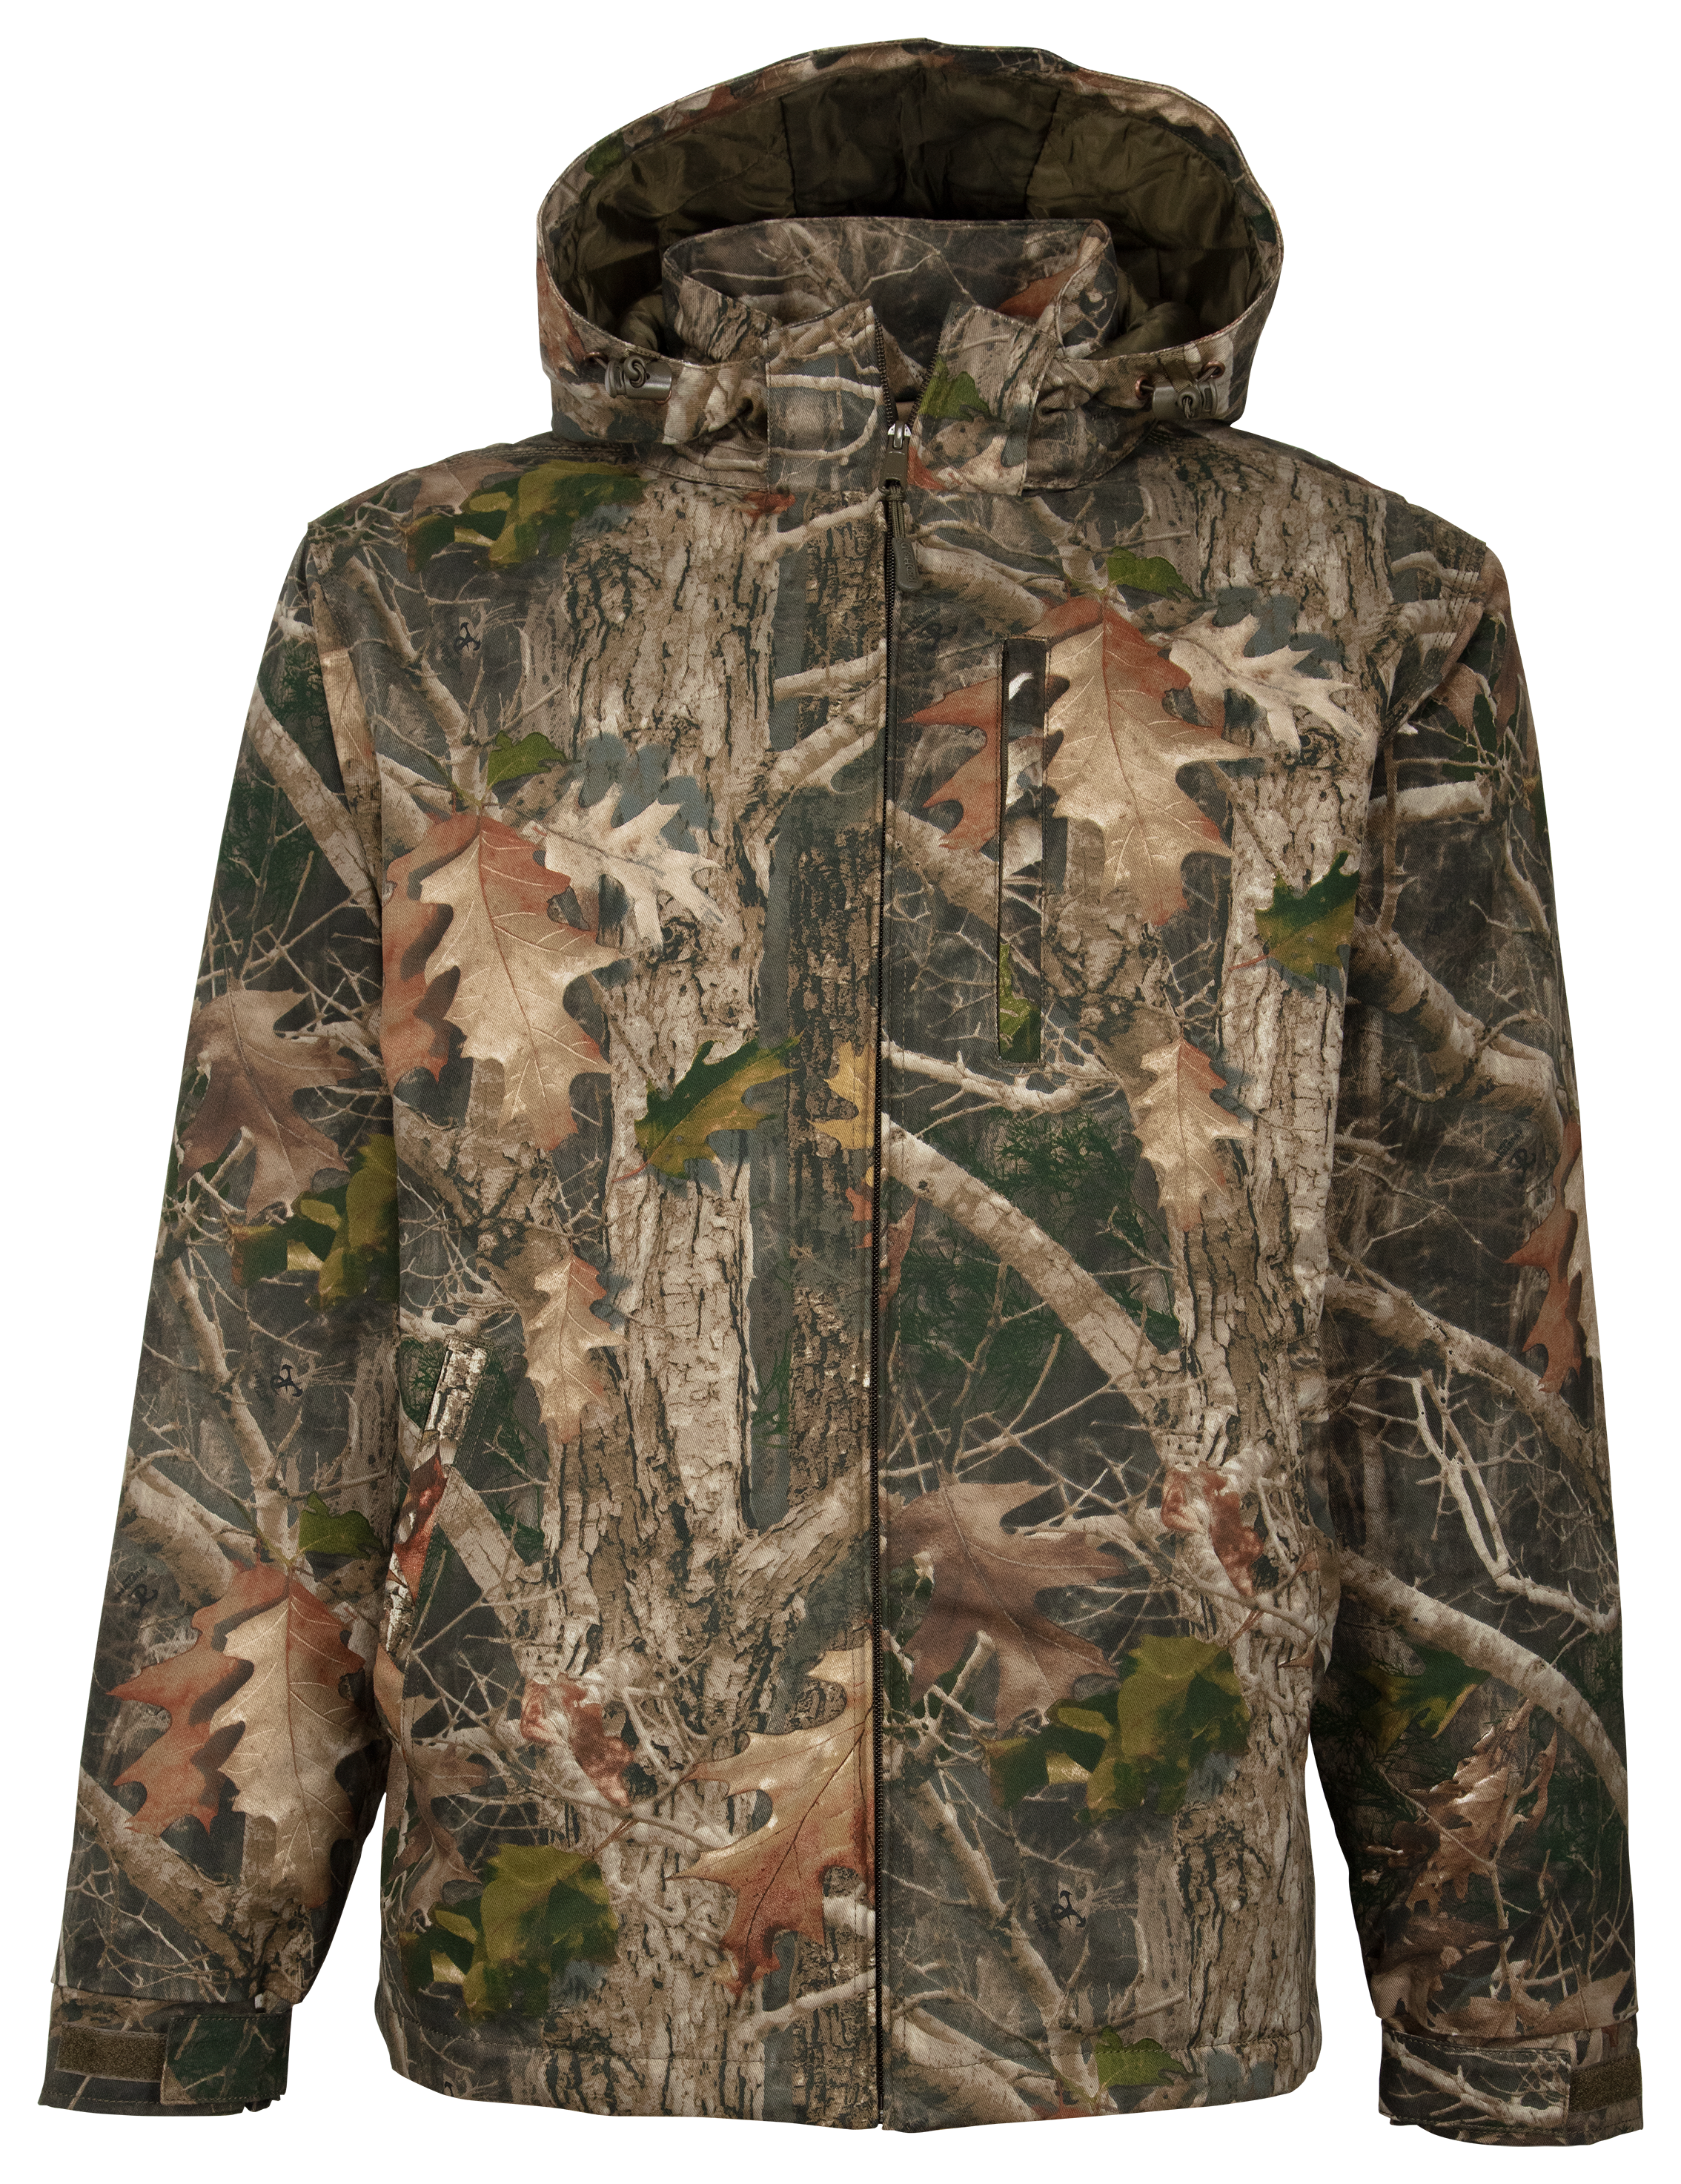 Arrow-motif camouflage shirt jacket